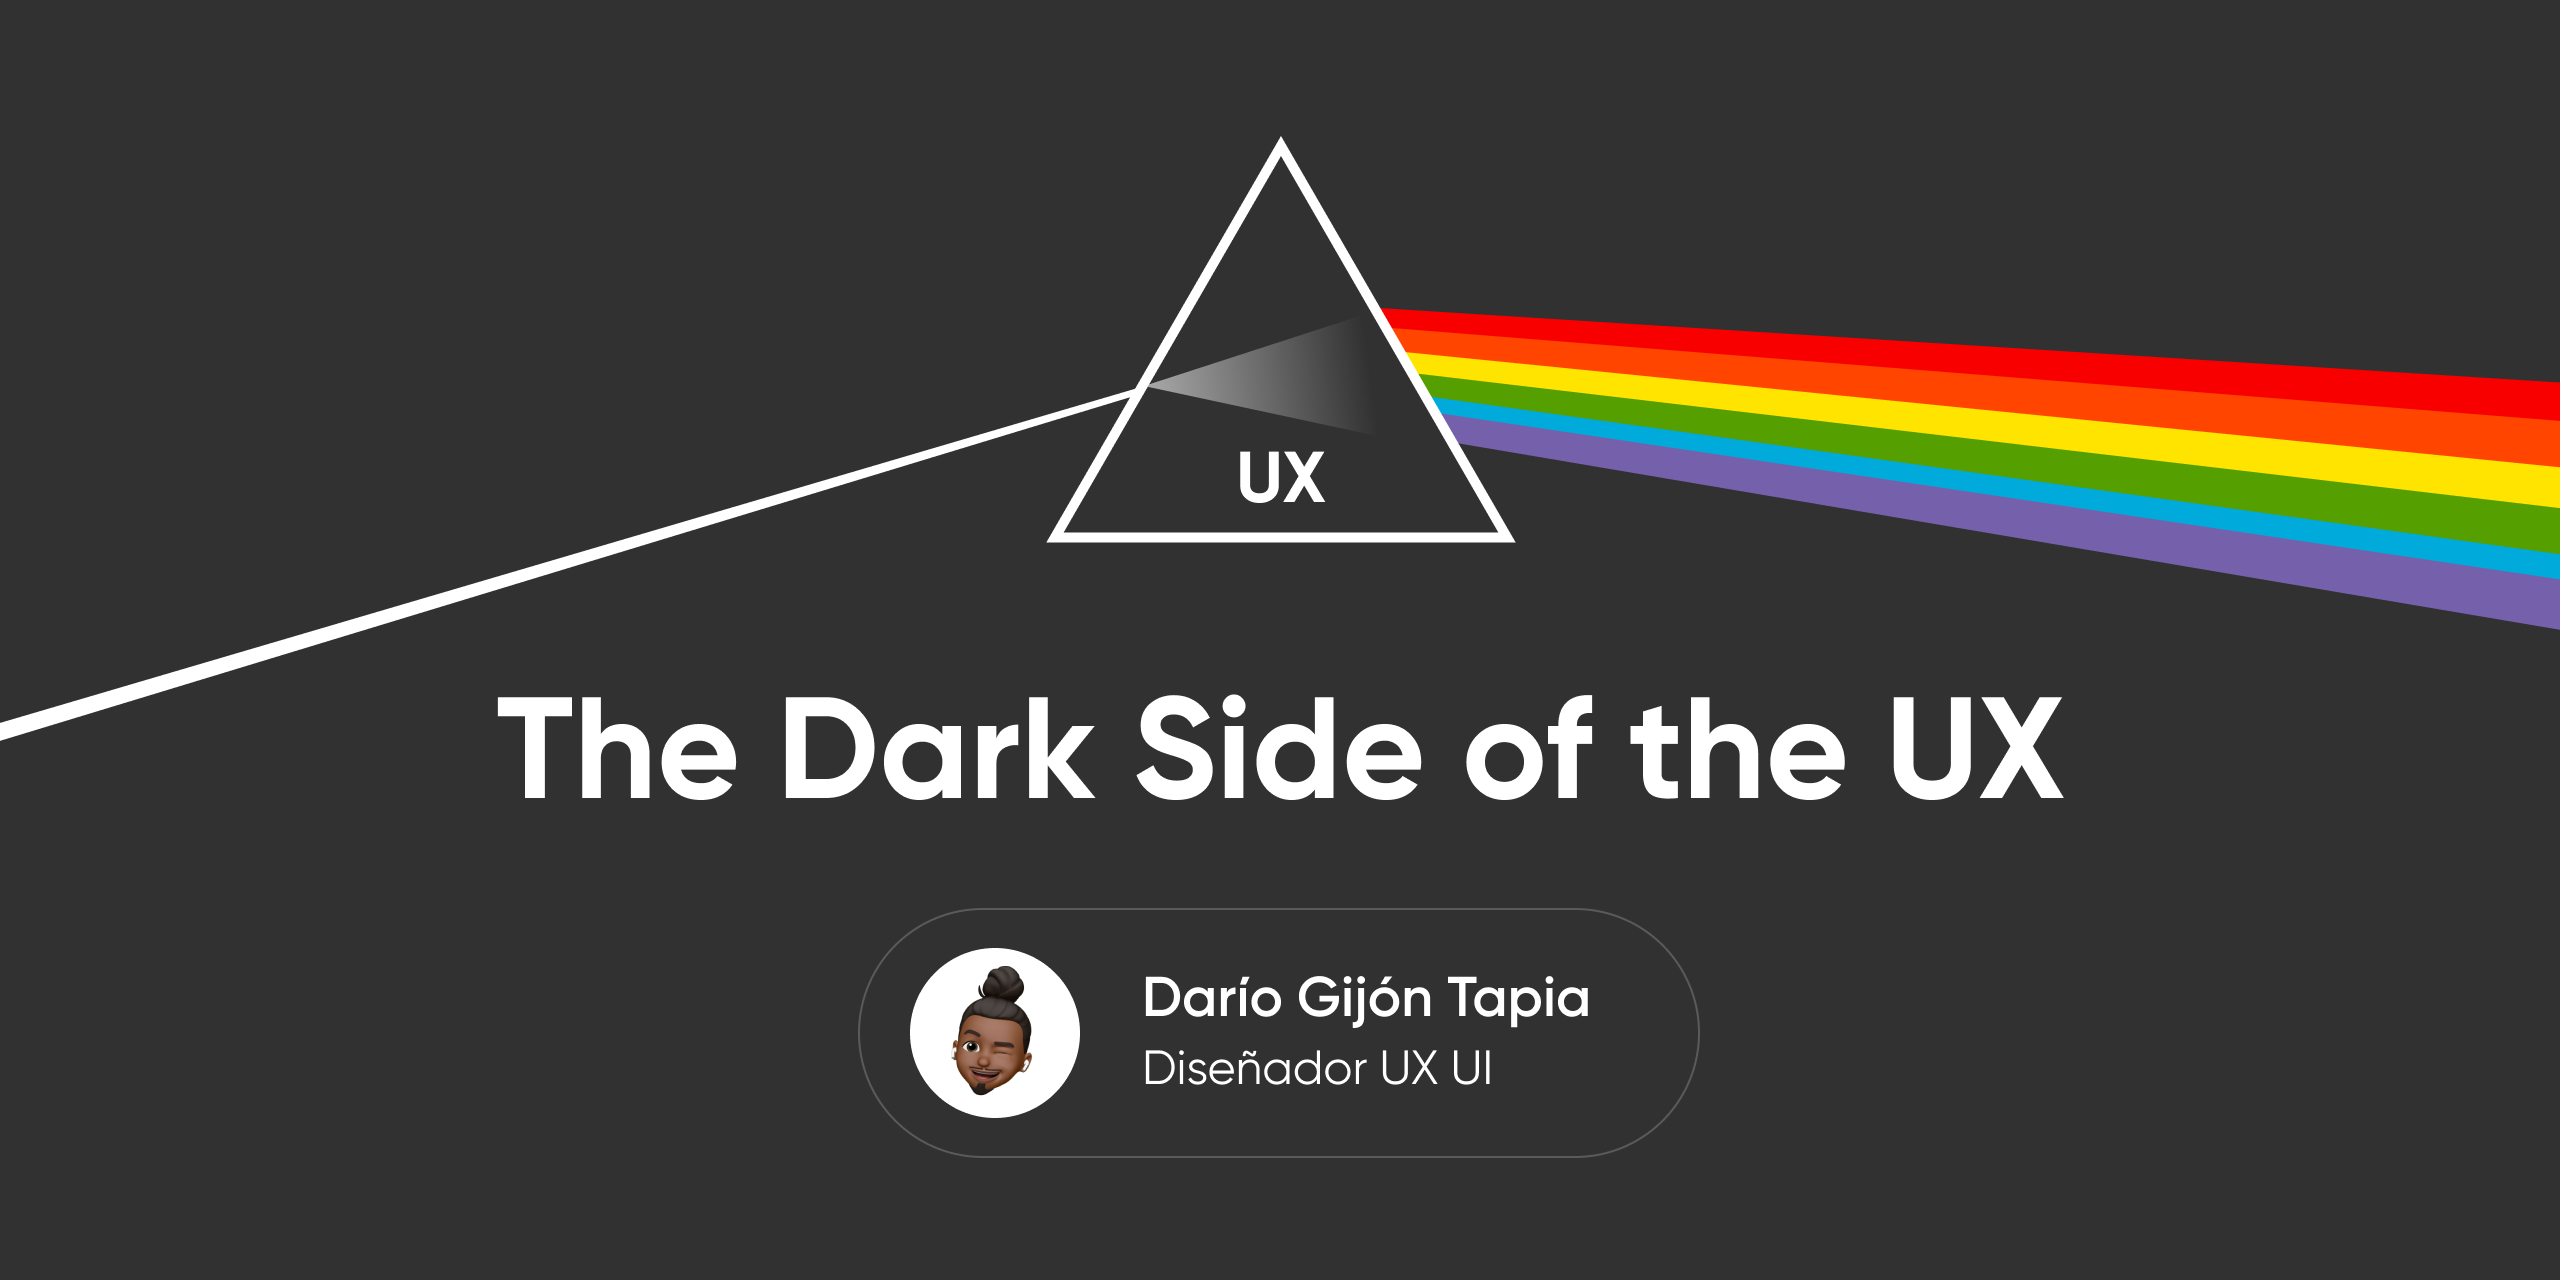 The dark side of ux